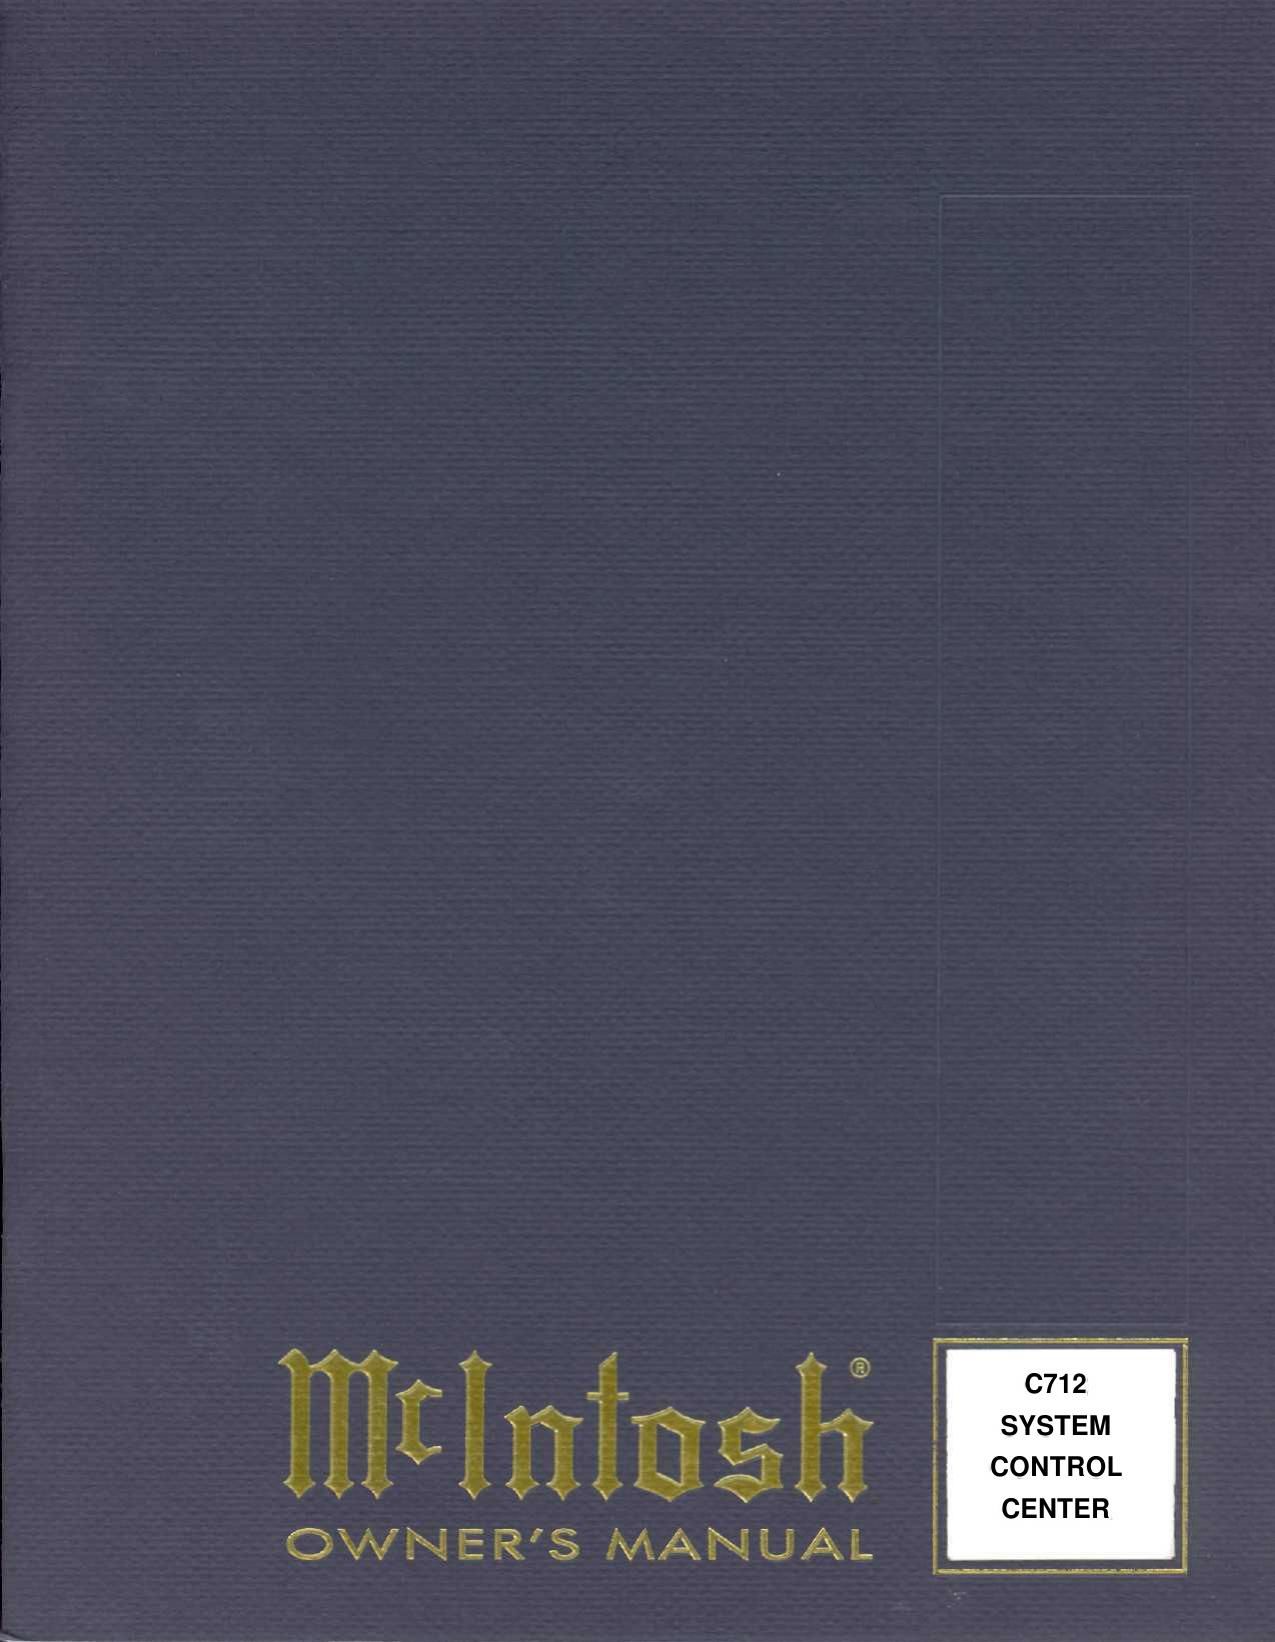 Mcintosh C712 Owners Manual